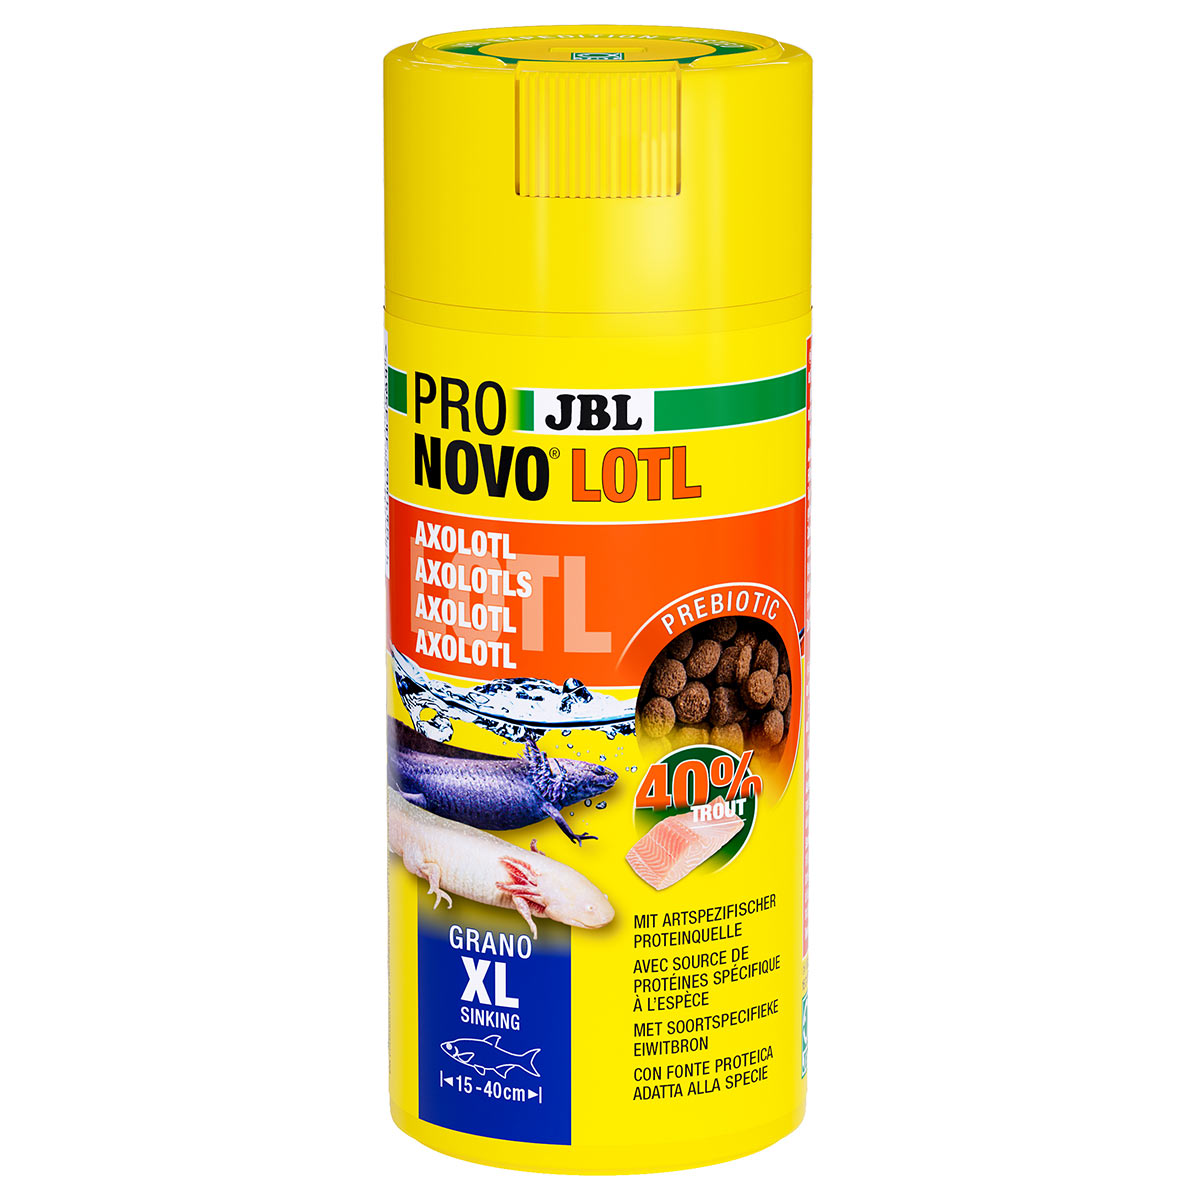 JBL PRONOVO LOTL GRANO XL, 250 ml